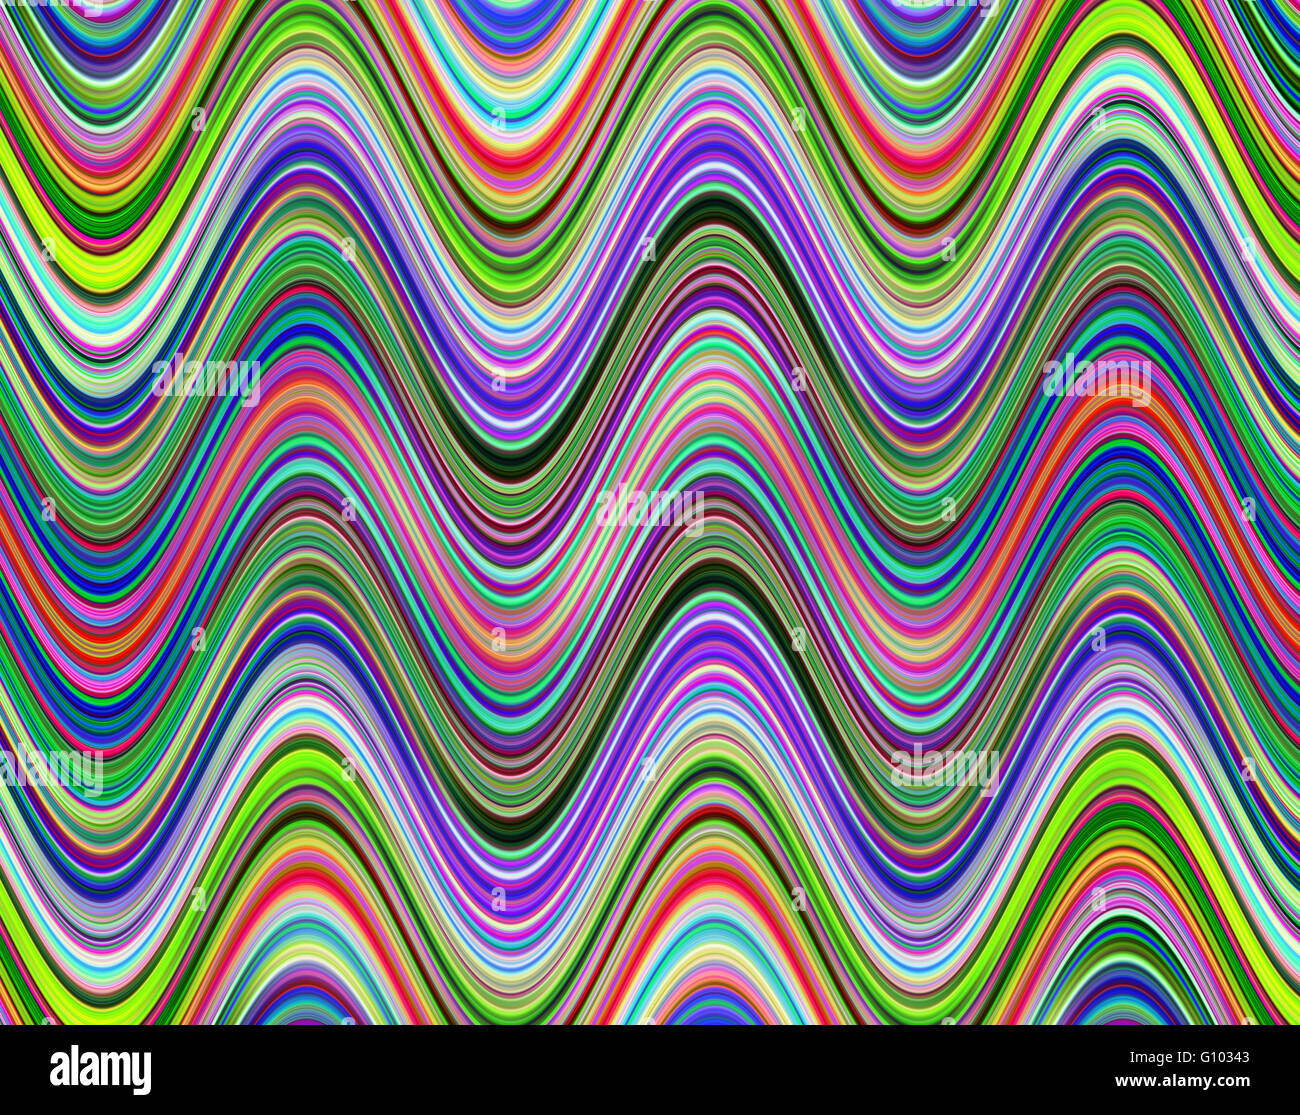 Multicoloured digital waves pattern illustration. Stock Photo